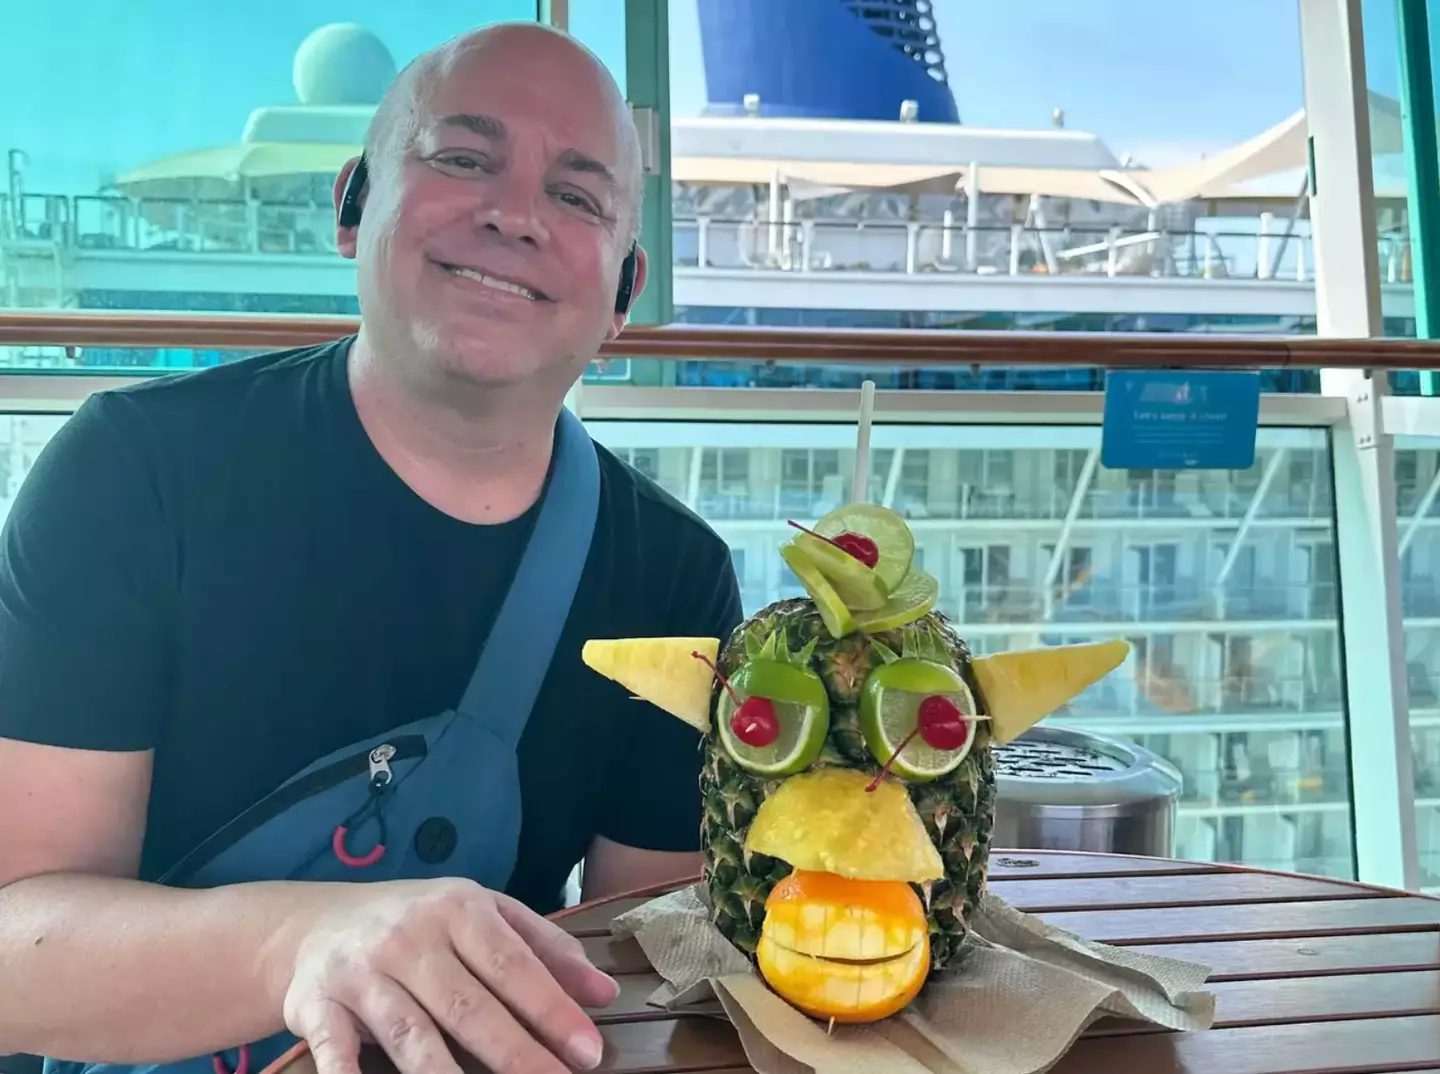 Ryan Gutridge lives on a cruise ship for 300 days a year.